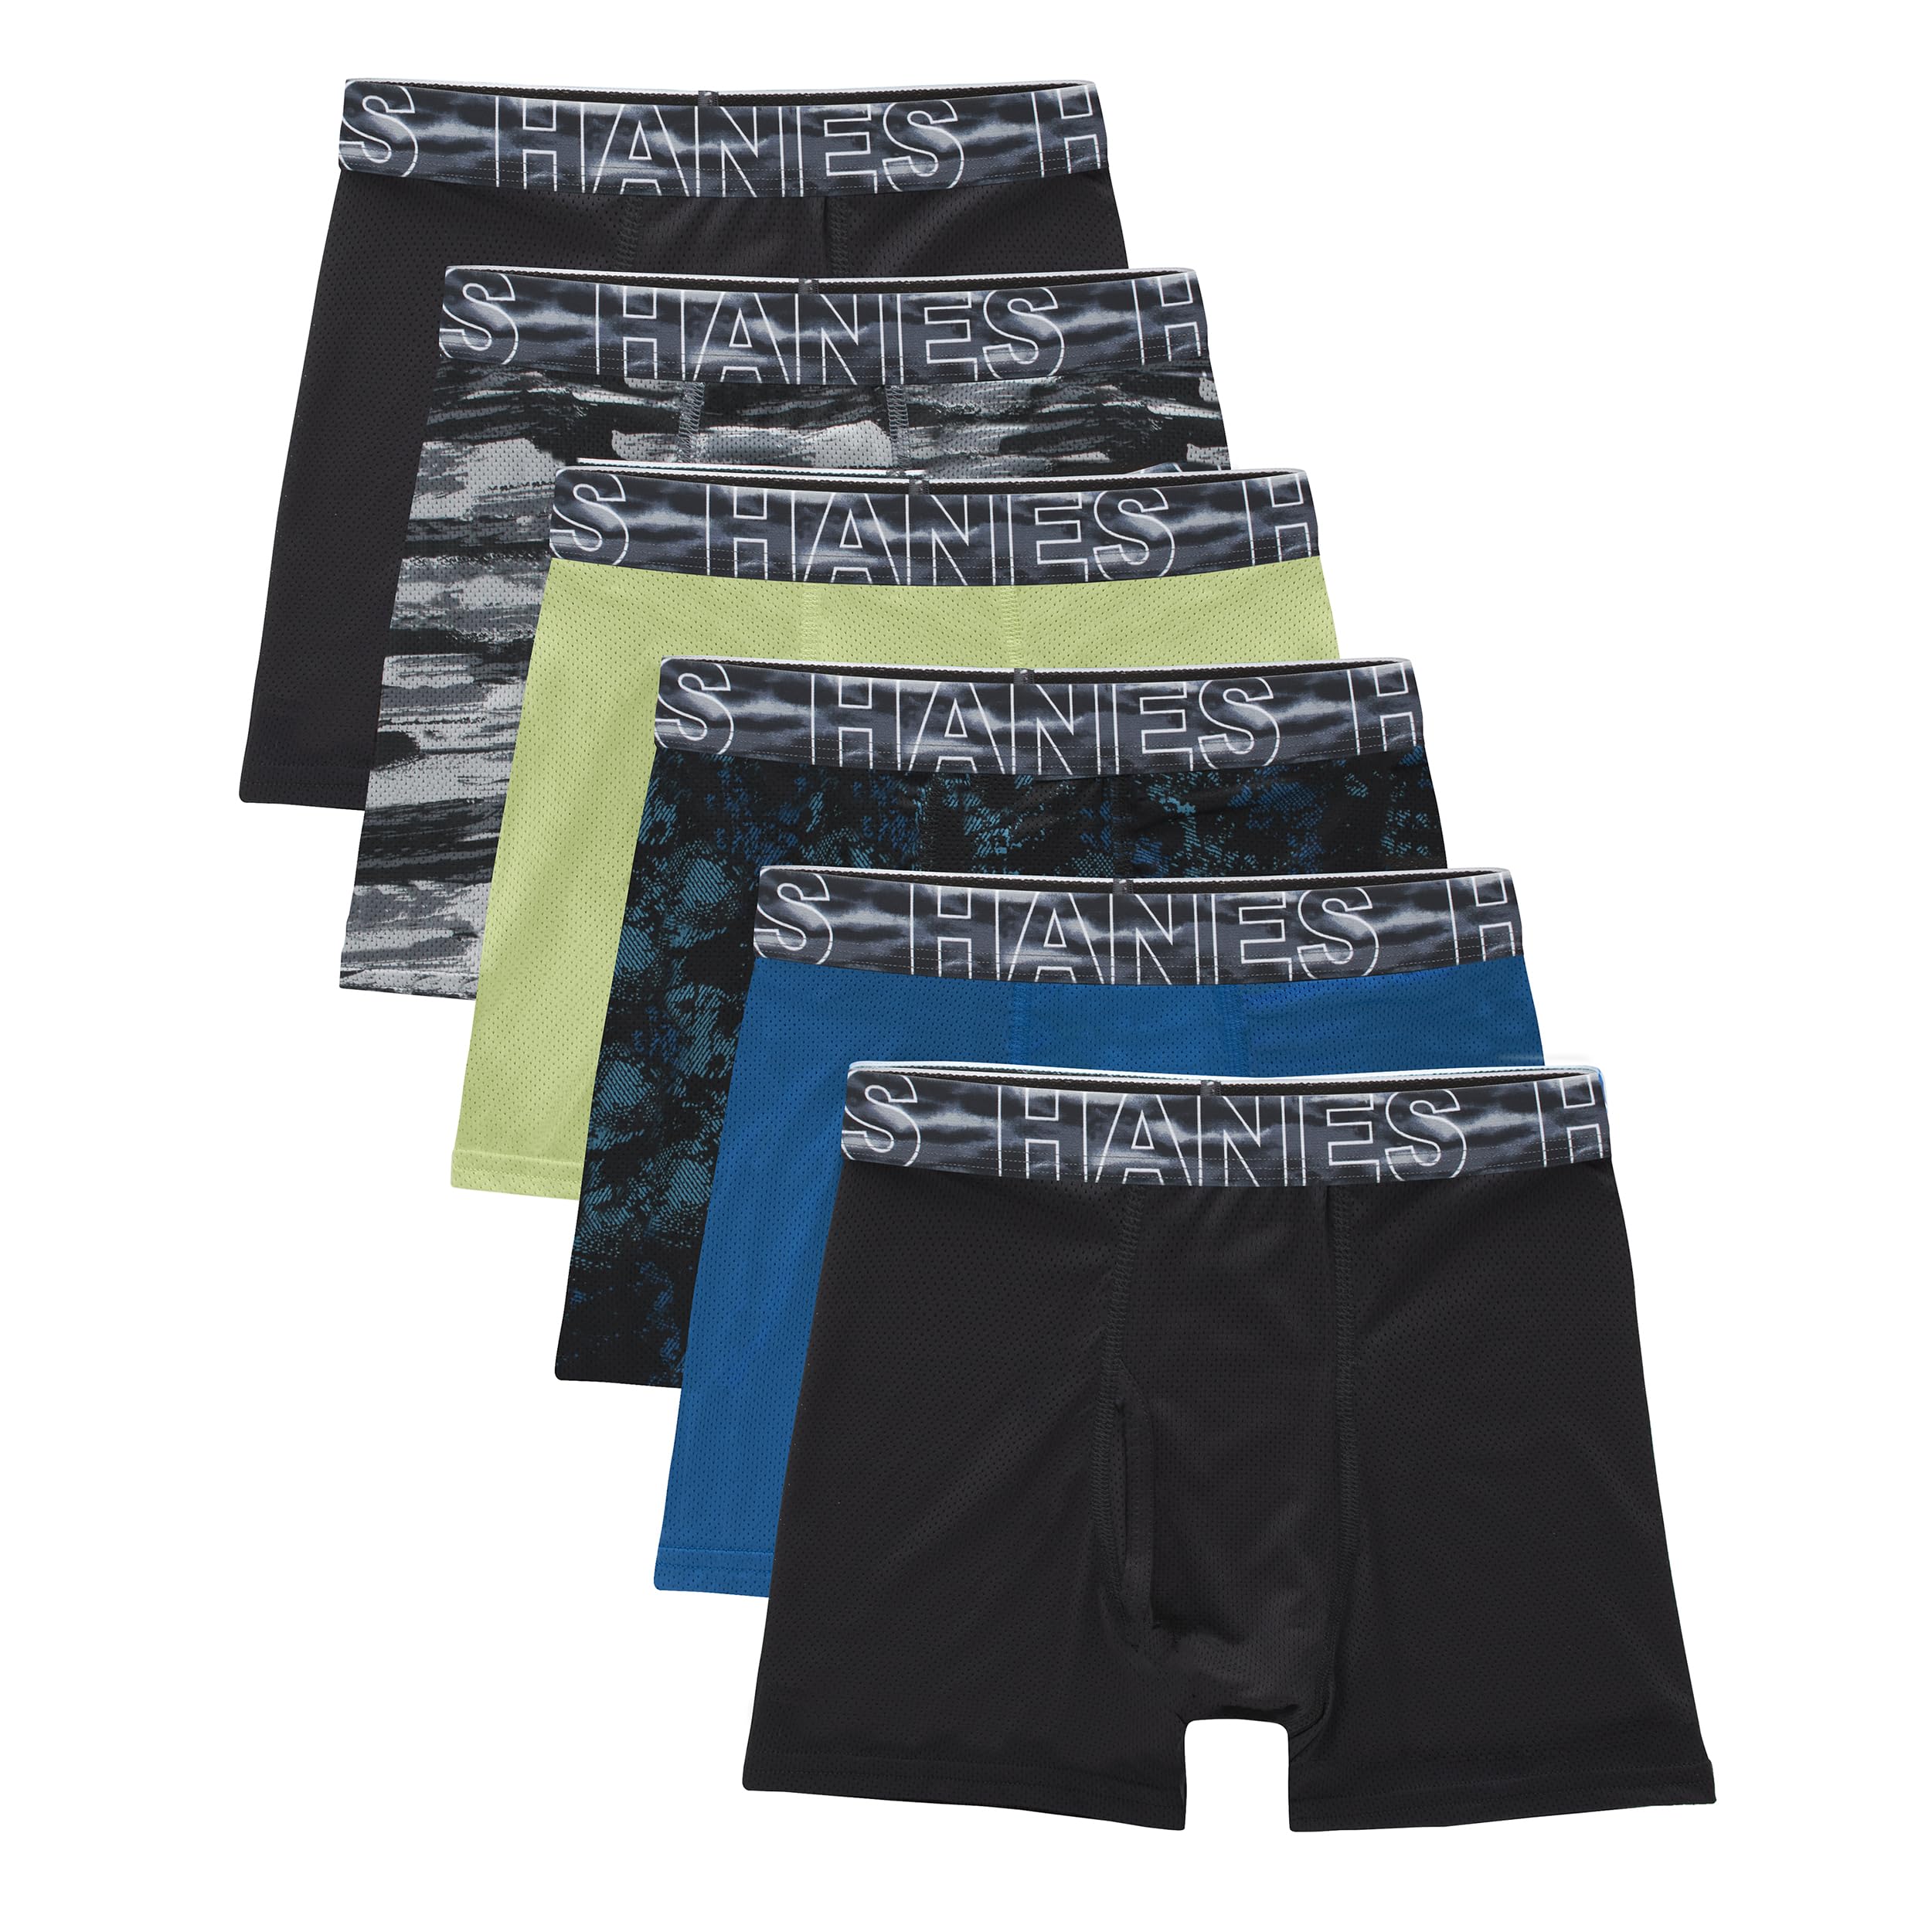 Hanes Boys' Big Performance Tween Boxer Brief Pack, X-Temp Mesh Underwear, Assorted, 6-Pack